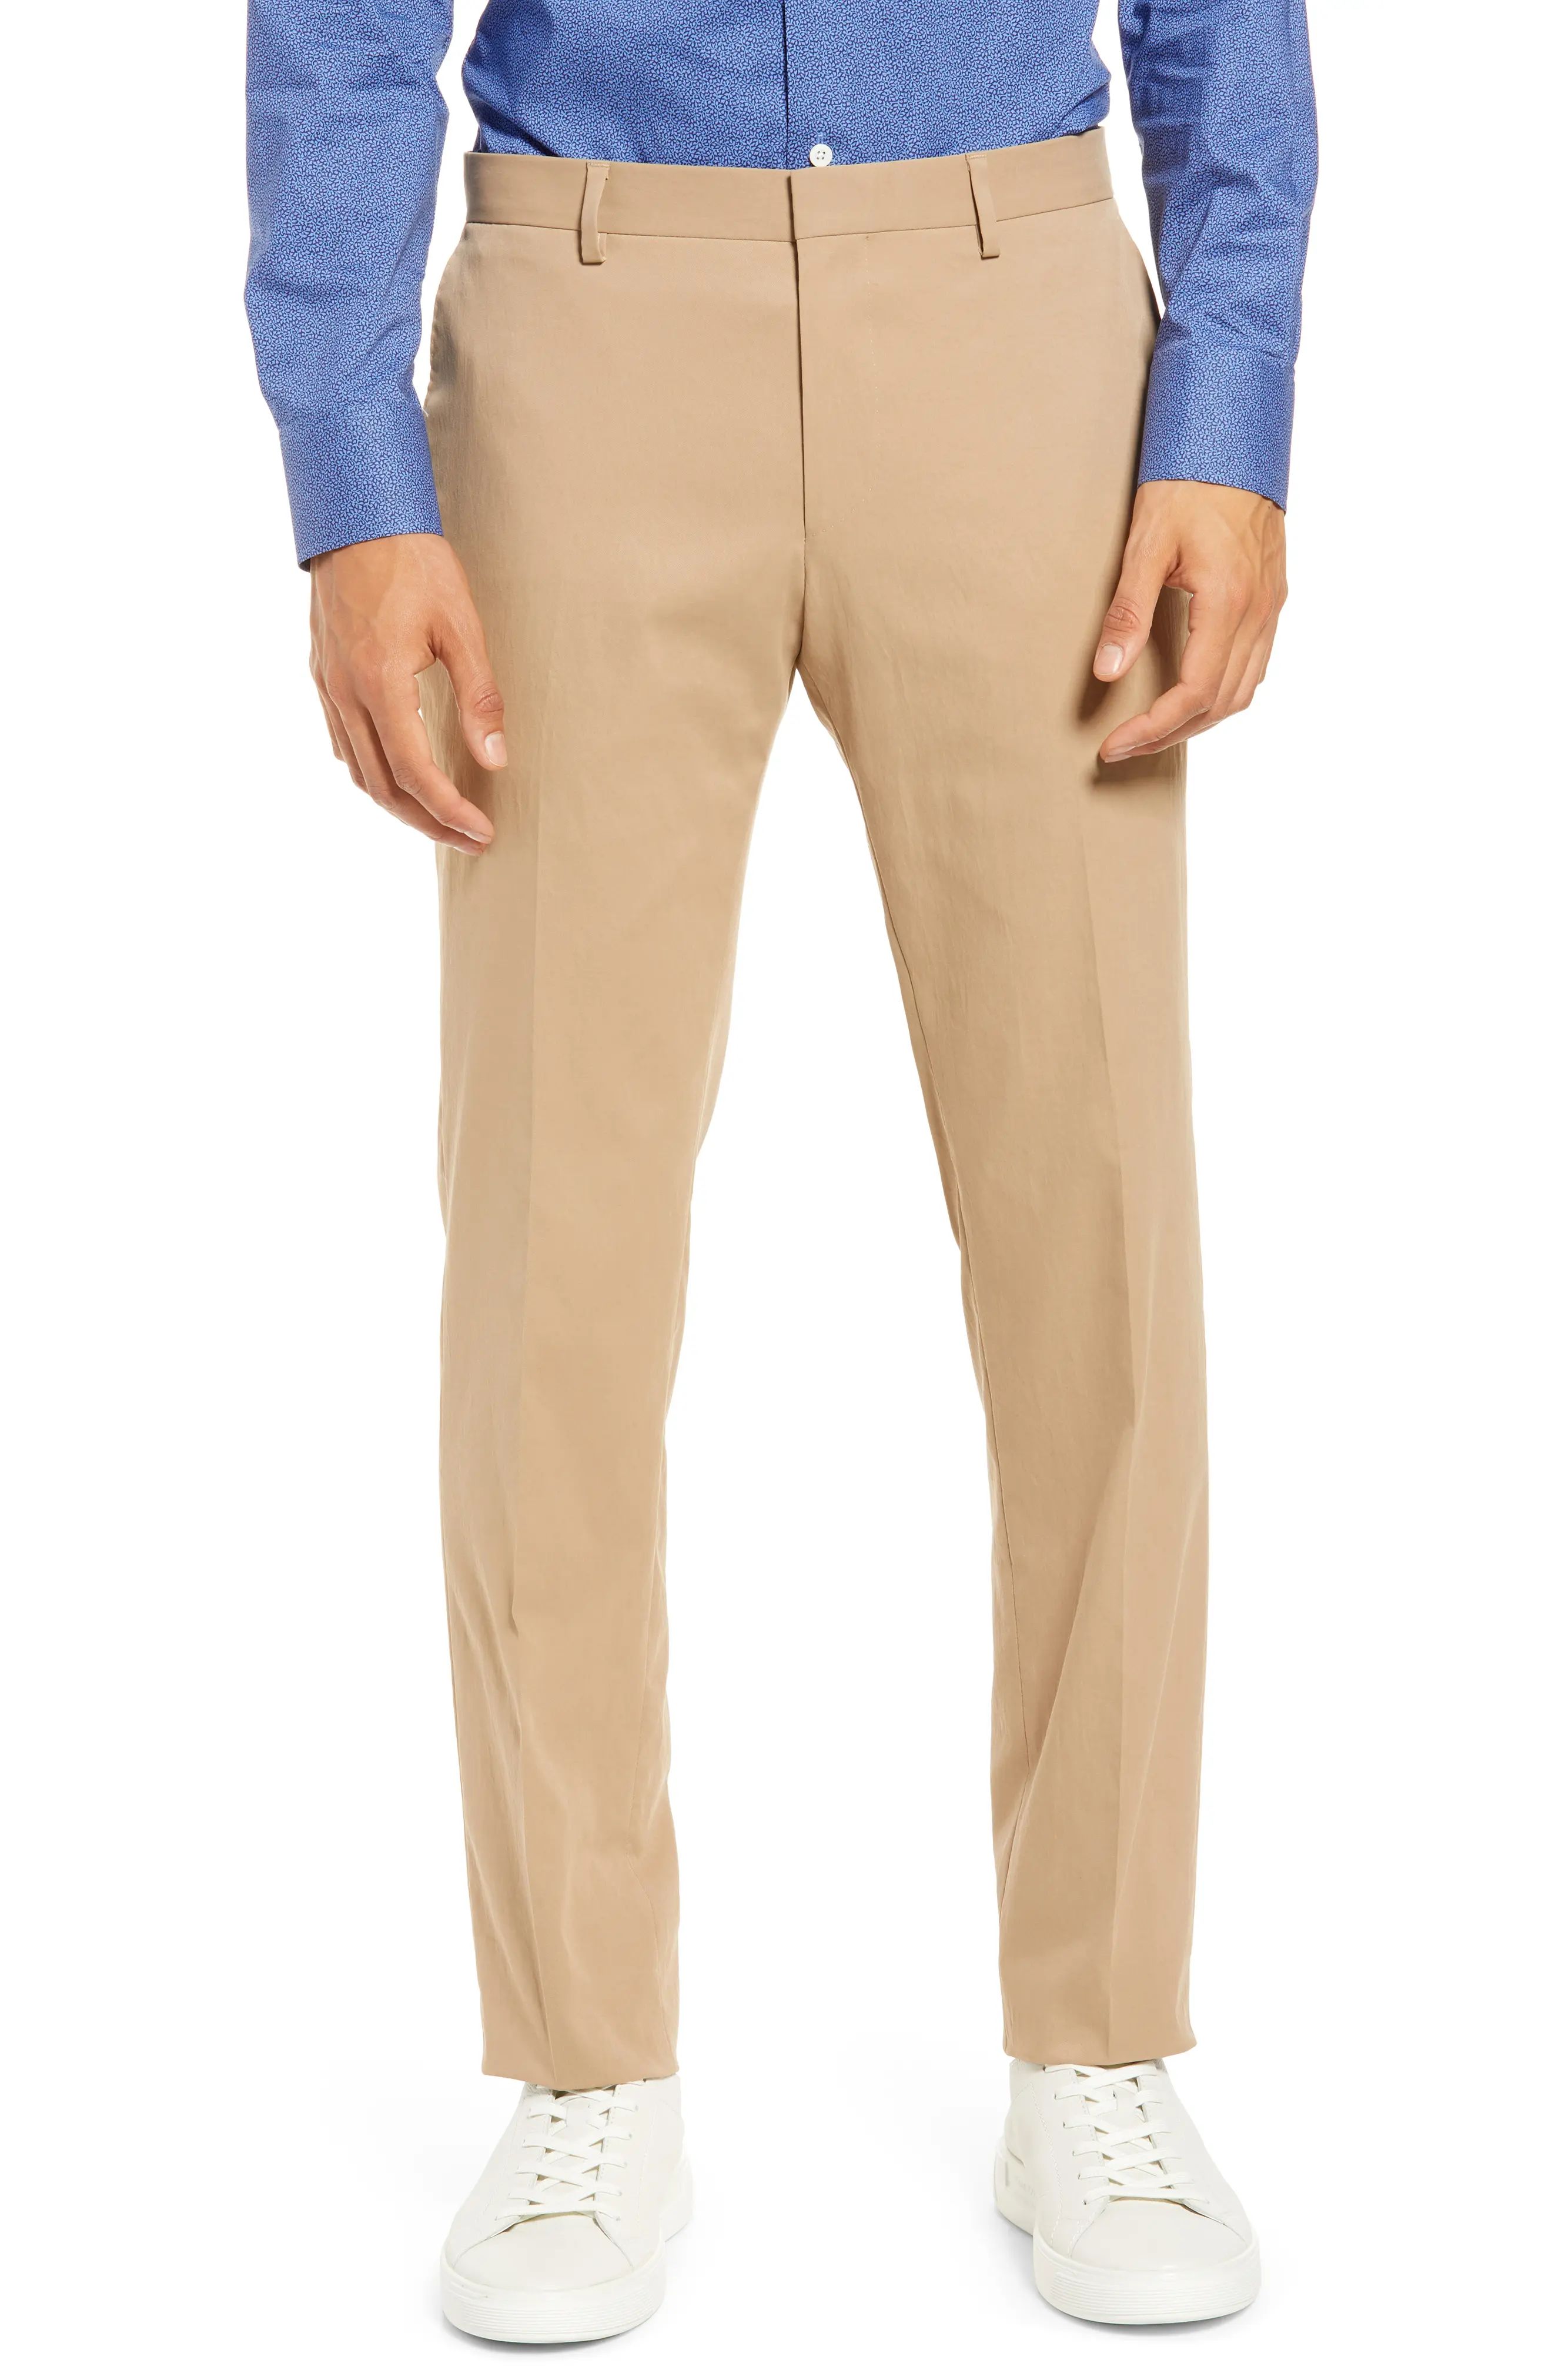 BOSS Genius Slim Fit Flat Front Dress Pants, Size 34 in Medium Beige at Nordstrom | Nordstrom